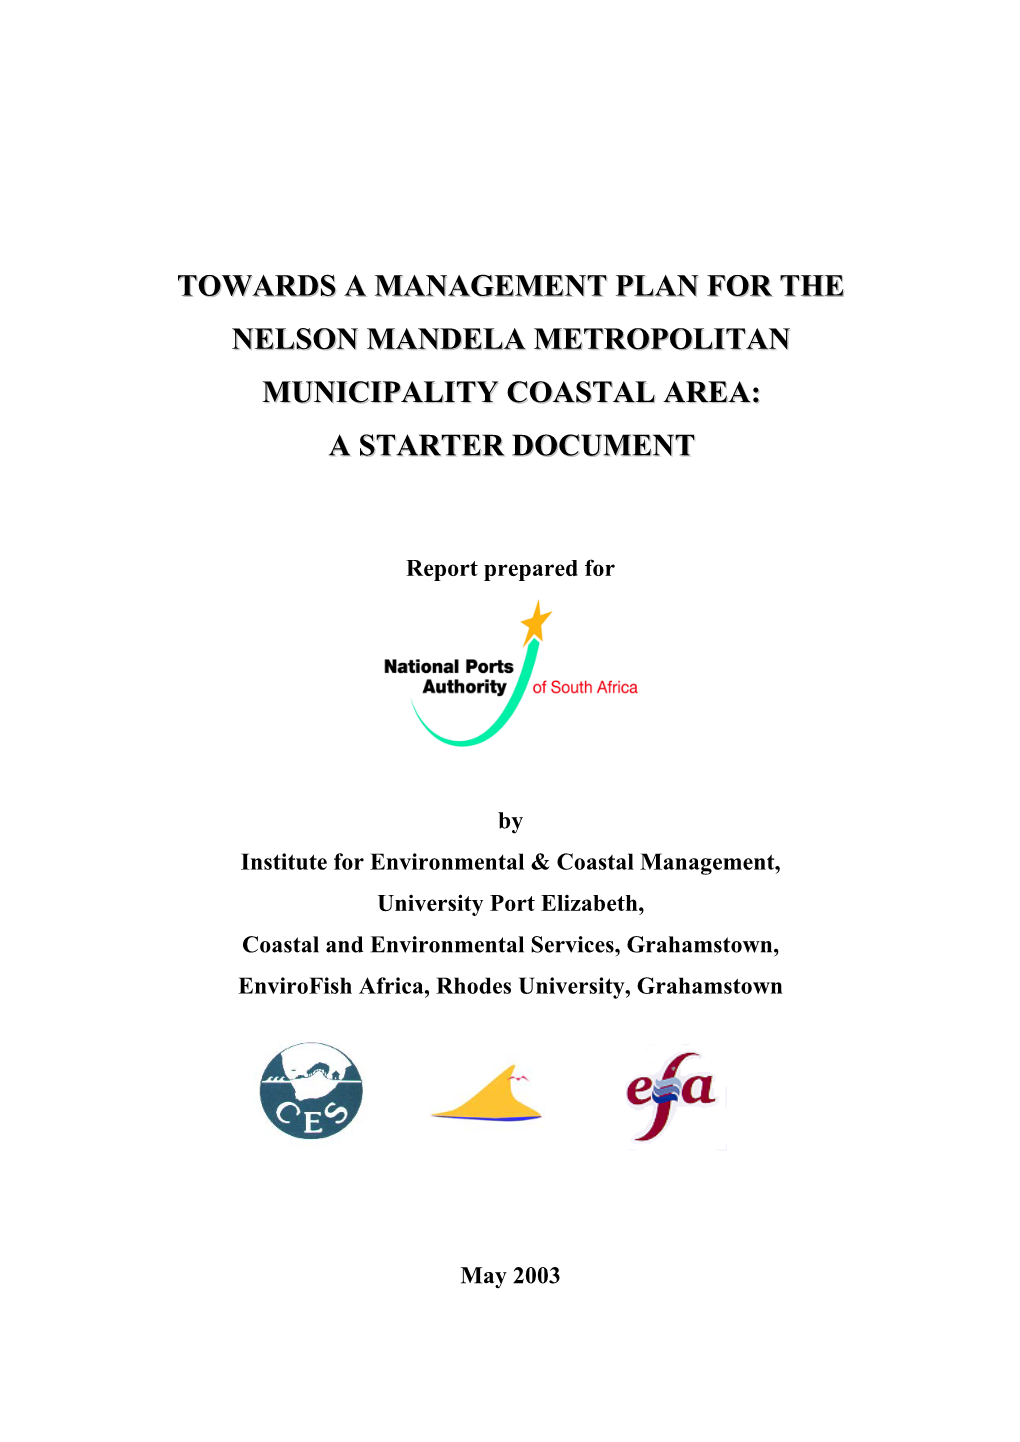 Towards a Coastal Management Plan for the Nelson Mandela